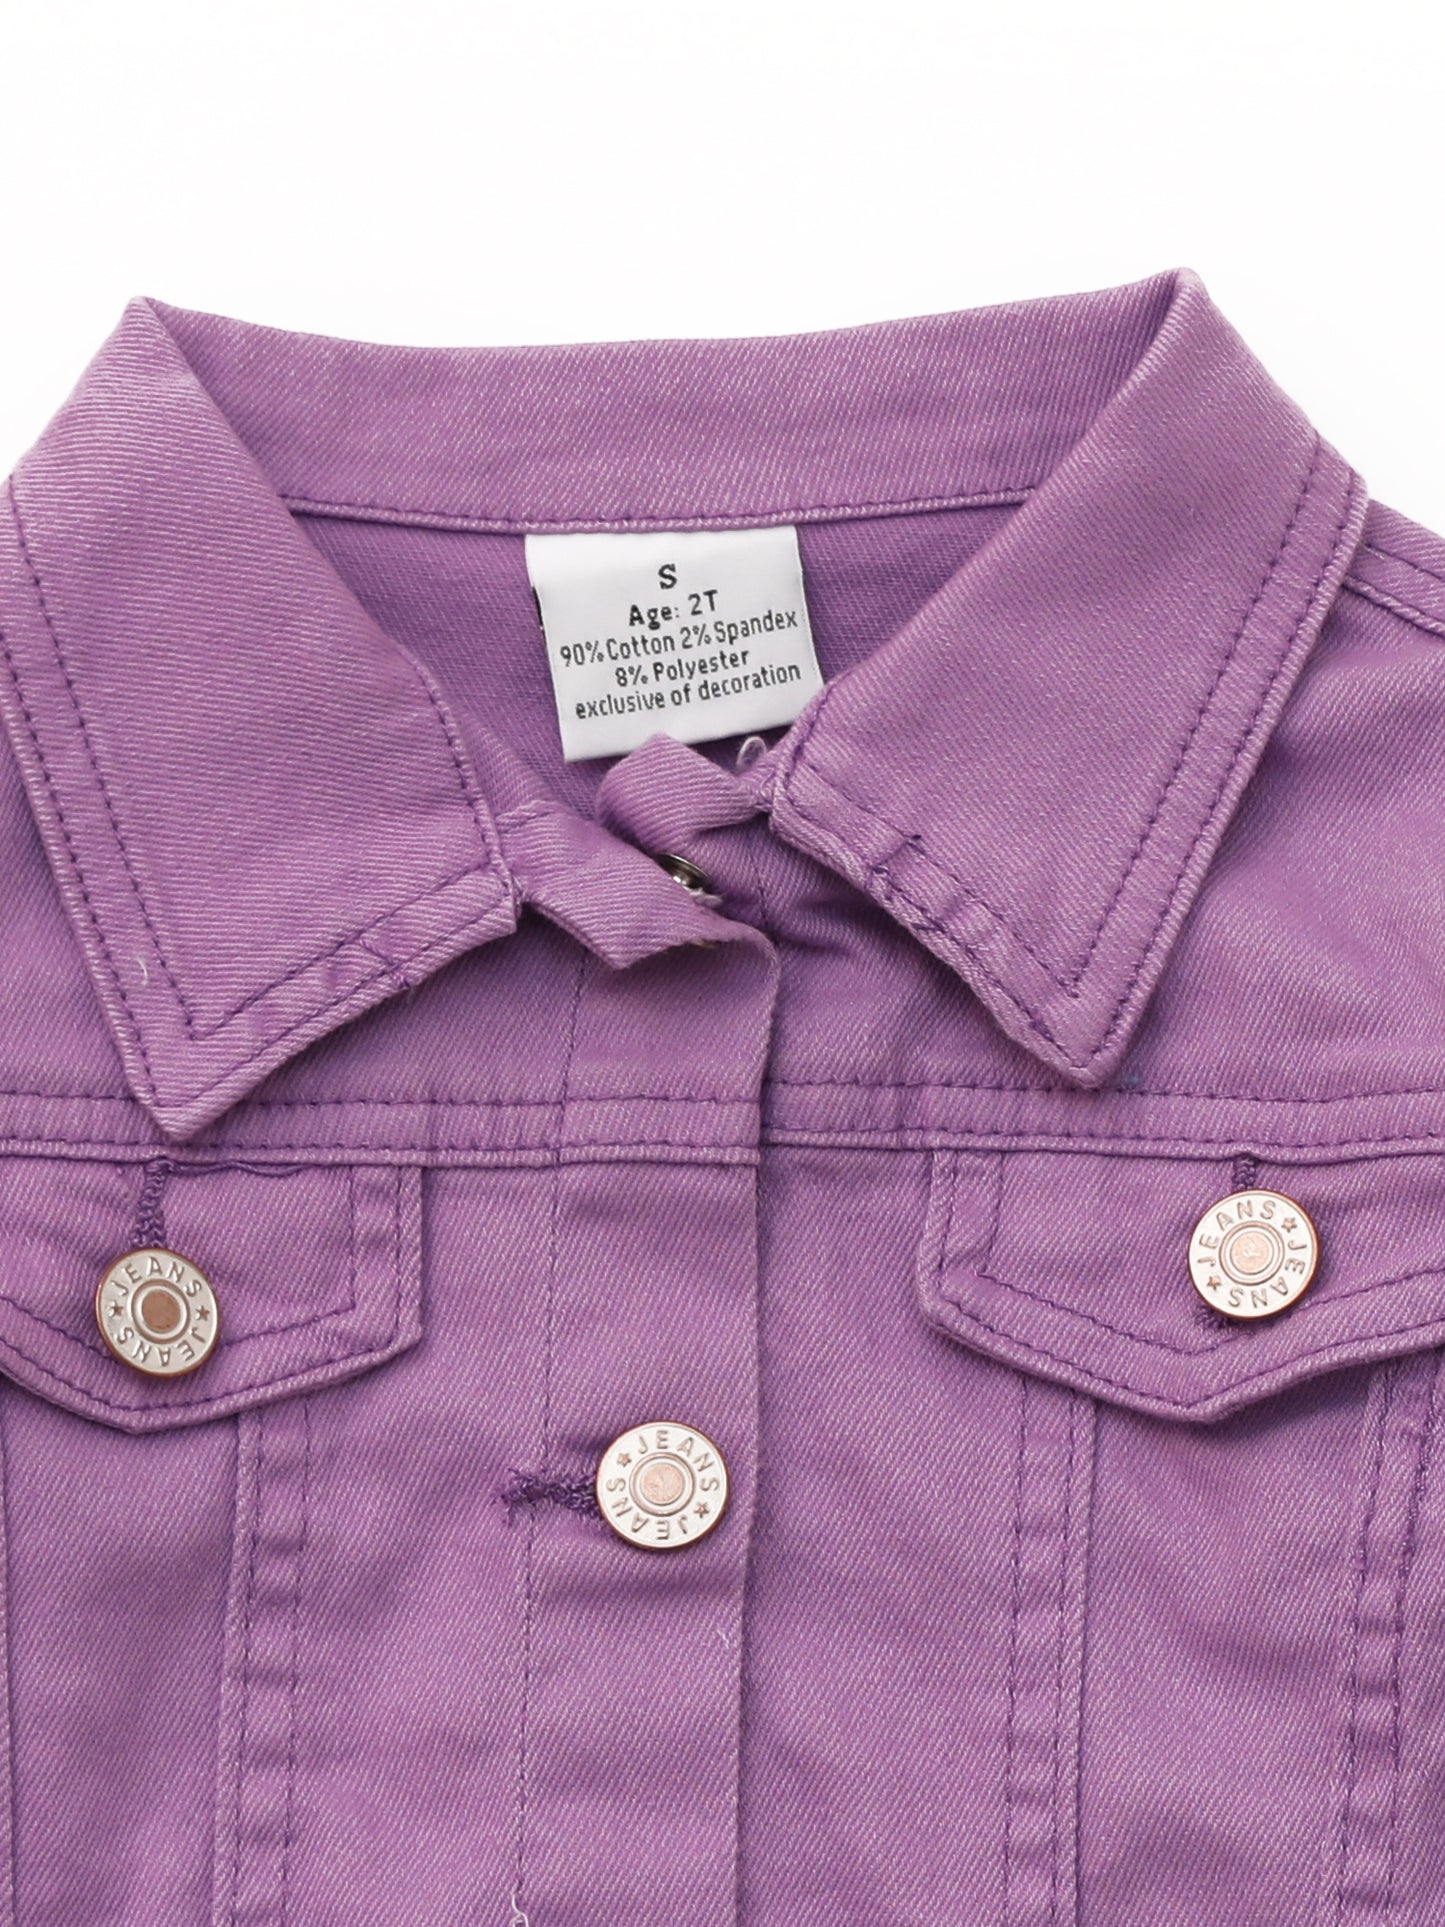 Kids Purple Fringe Denim Jackets